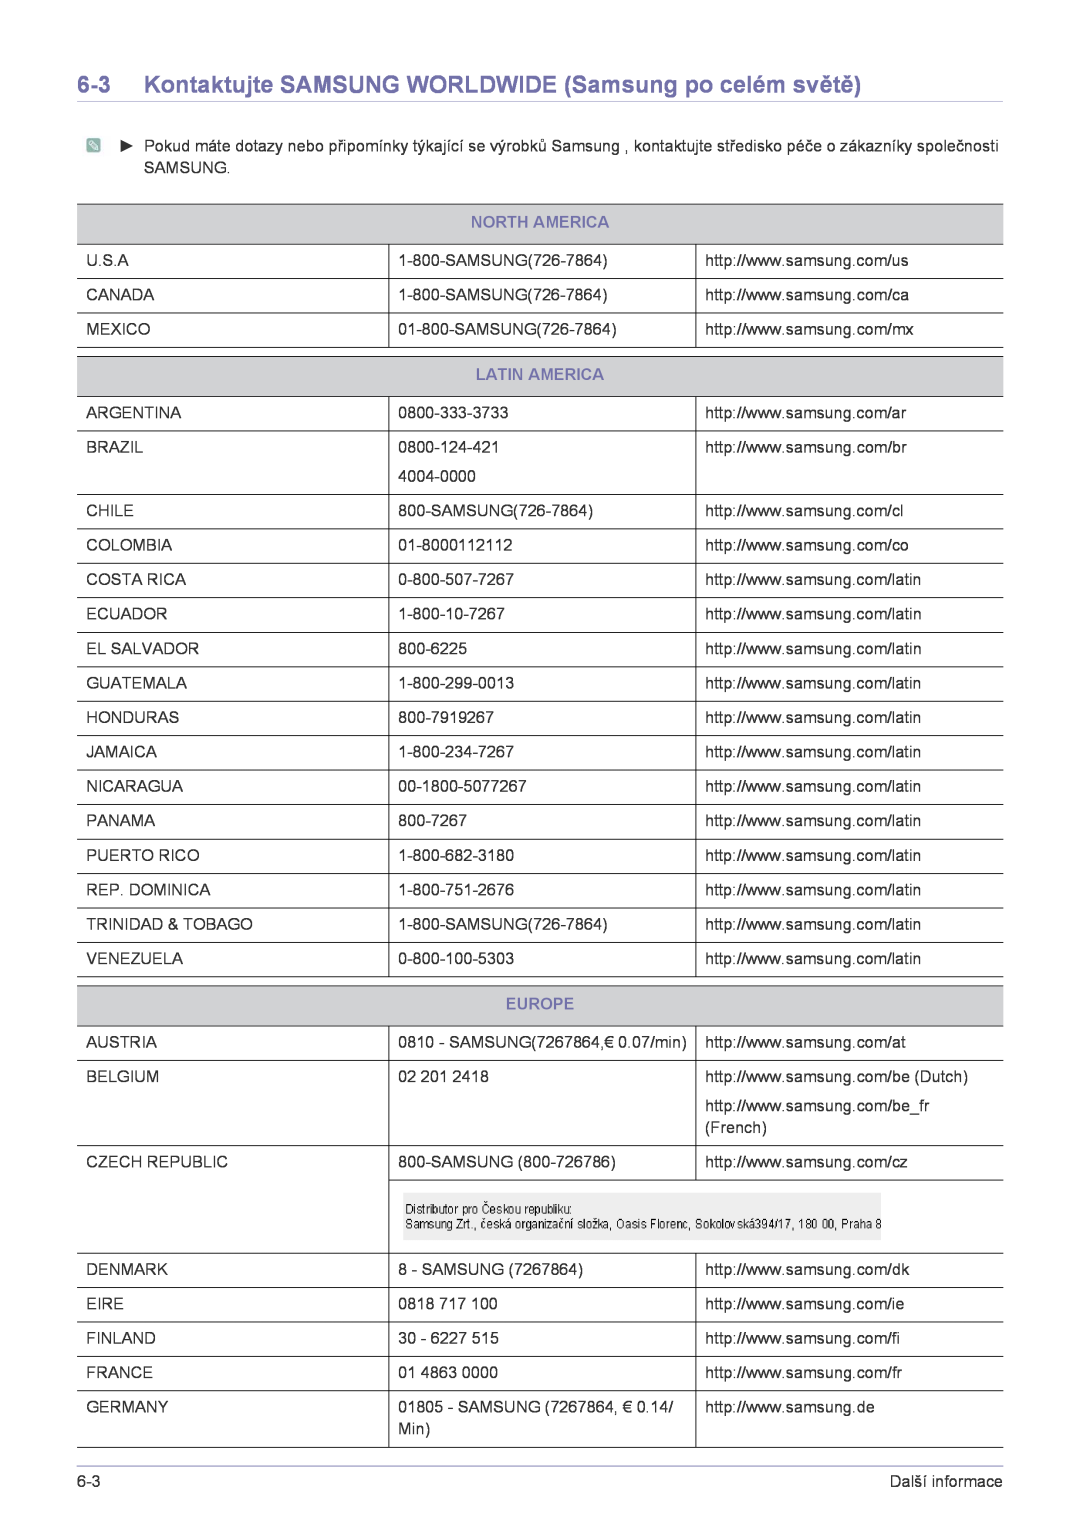 Samsung LS22FMDGF/EN manual Kontaktujte SAMSUNG WORLDWIDE Samsung po celém světě, North America, Latin America, Europe 